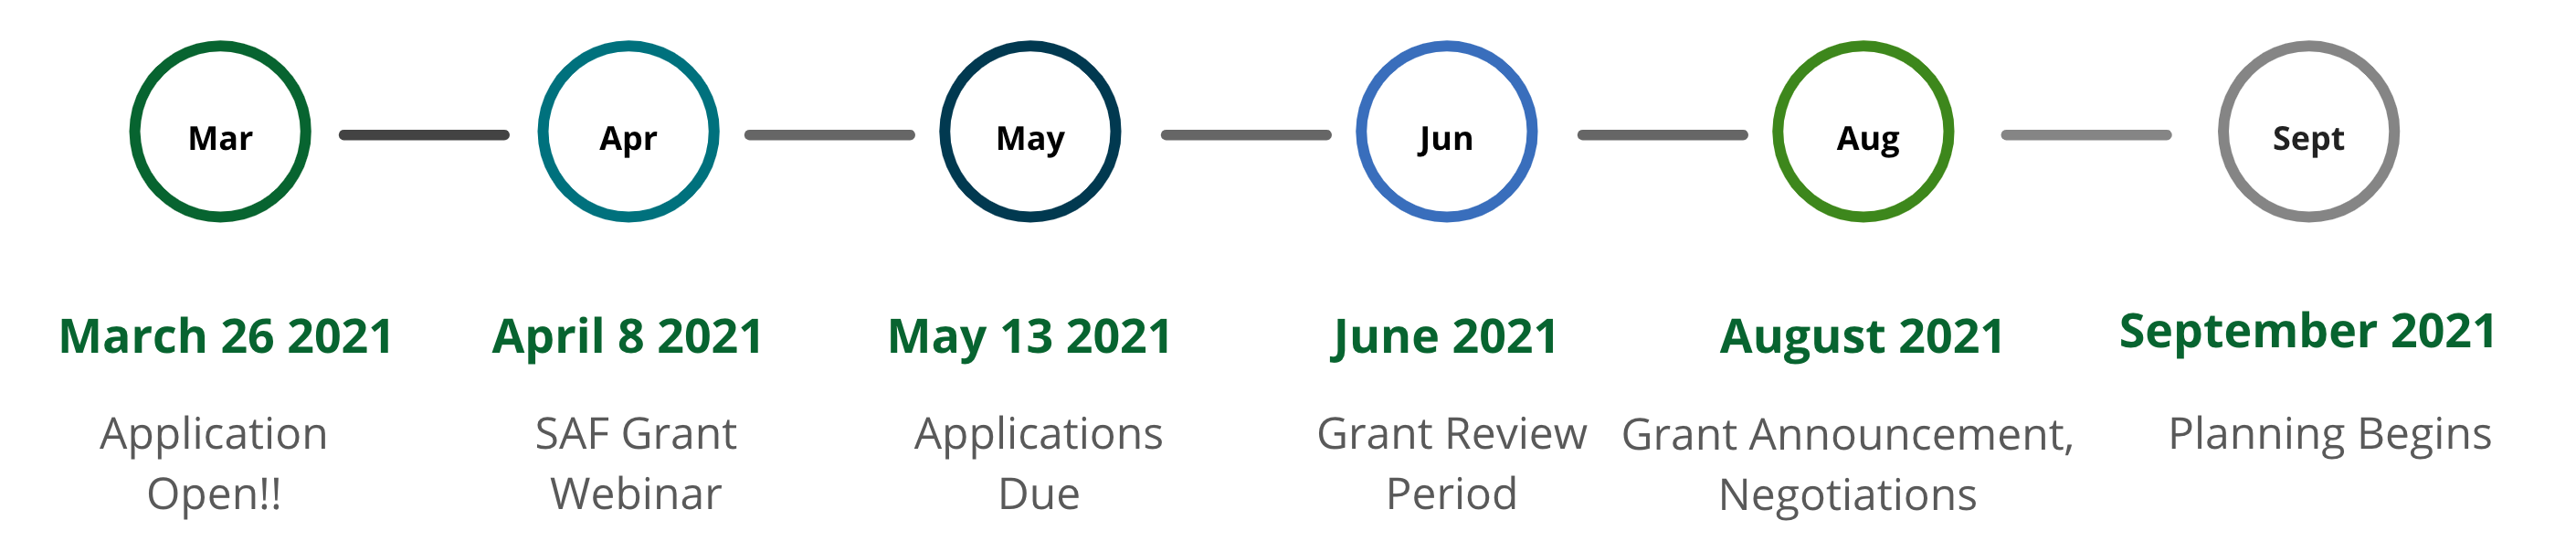 School Actions Timeline: March 26 Application opens, April 8 SAF Webinar, May 13 2021 Application Due, June 2021 Application Review, August 2021 Grants Awarded, September 2021 Planning begins